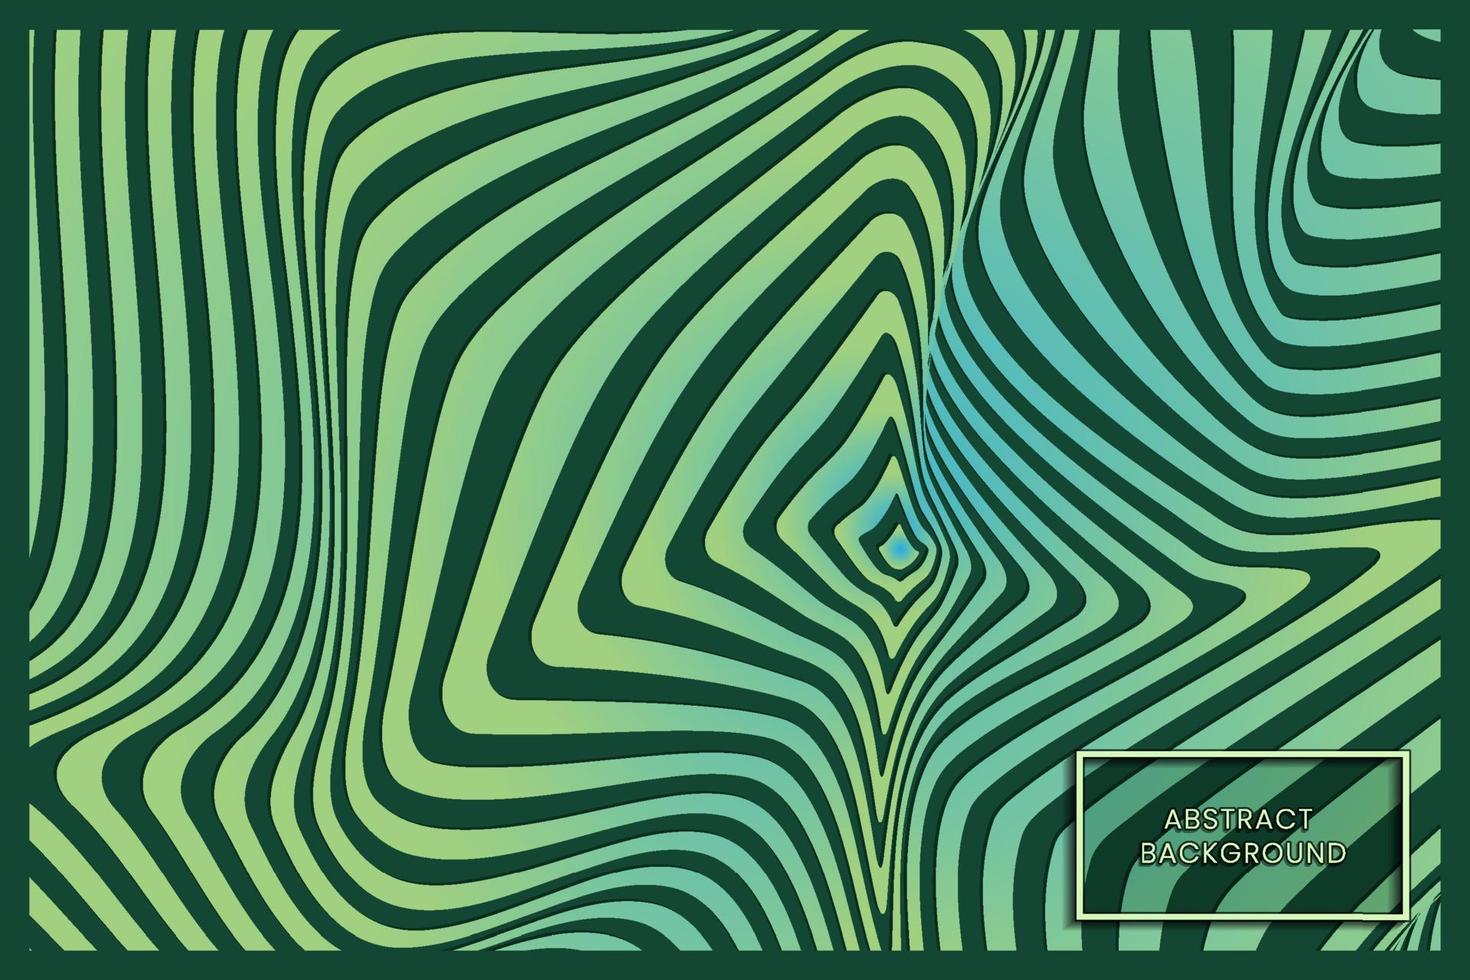 vector de fondo abstracto de líneas onduladas verdes deformadas